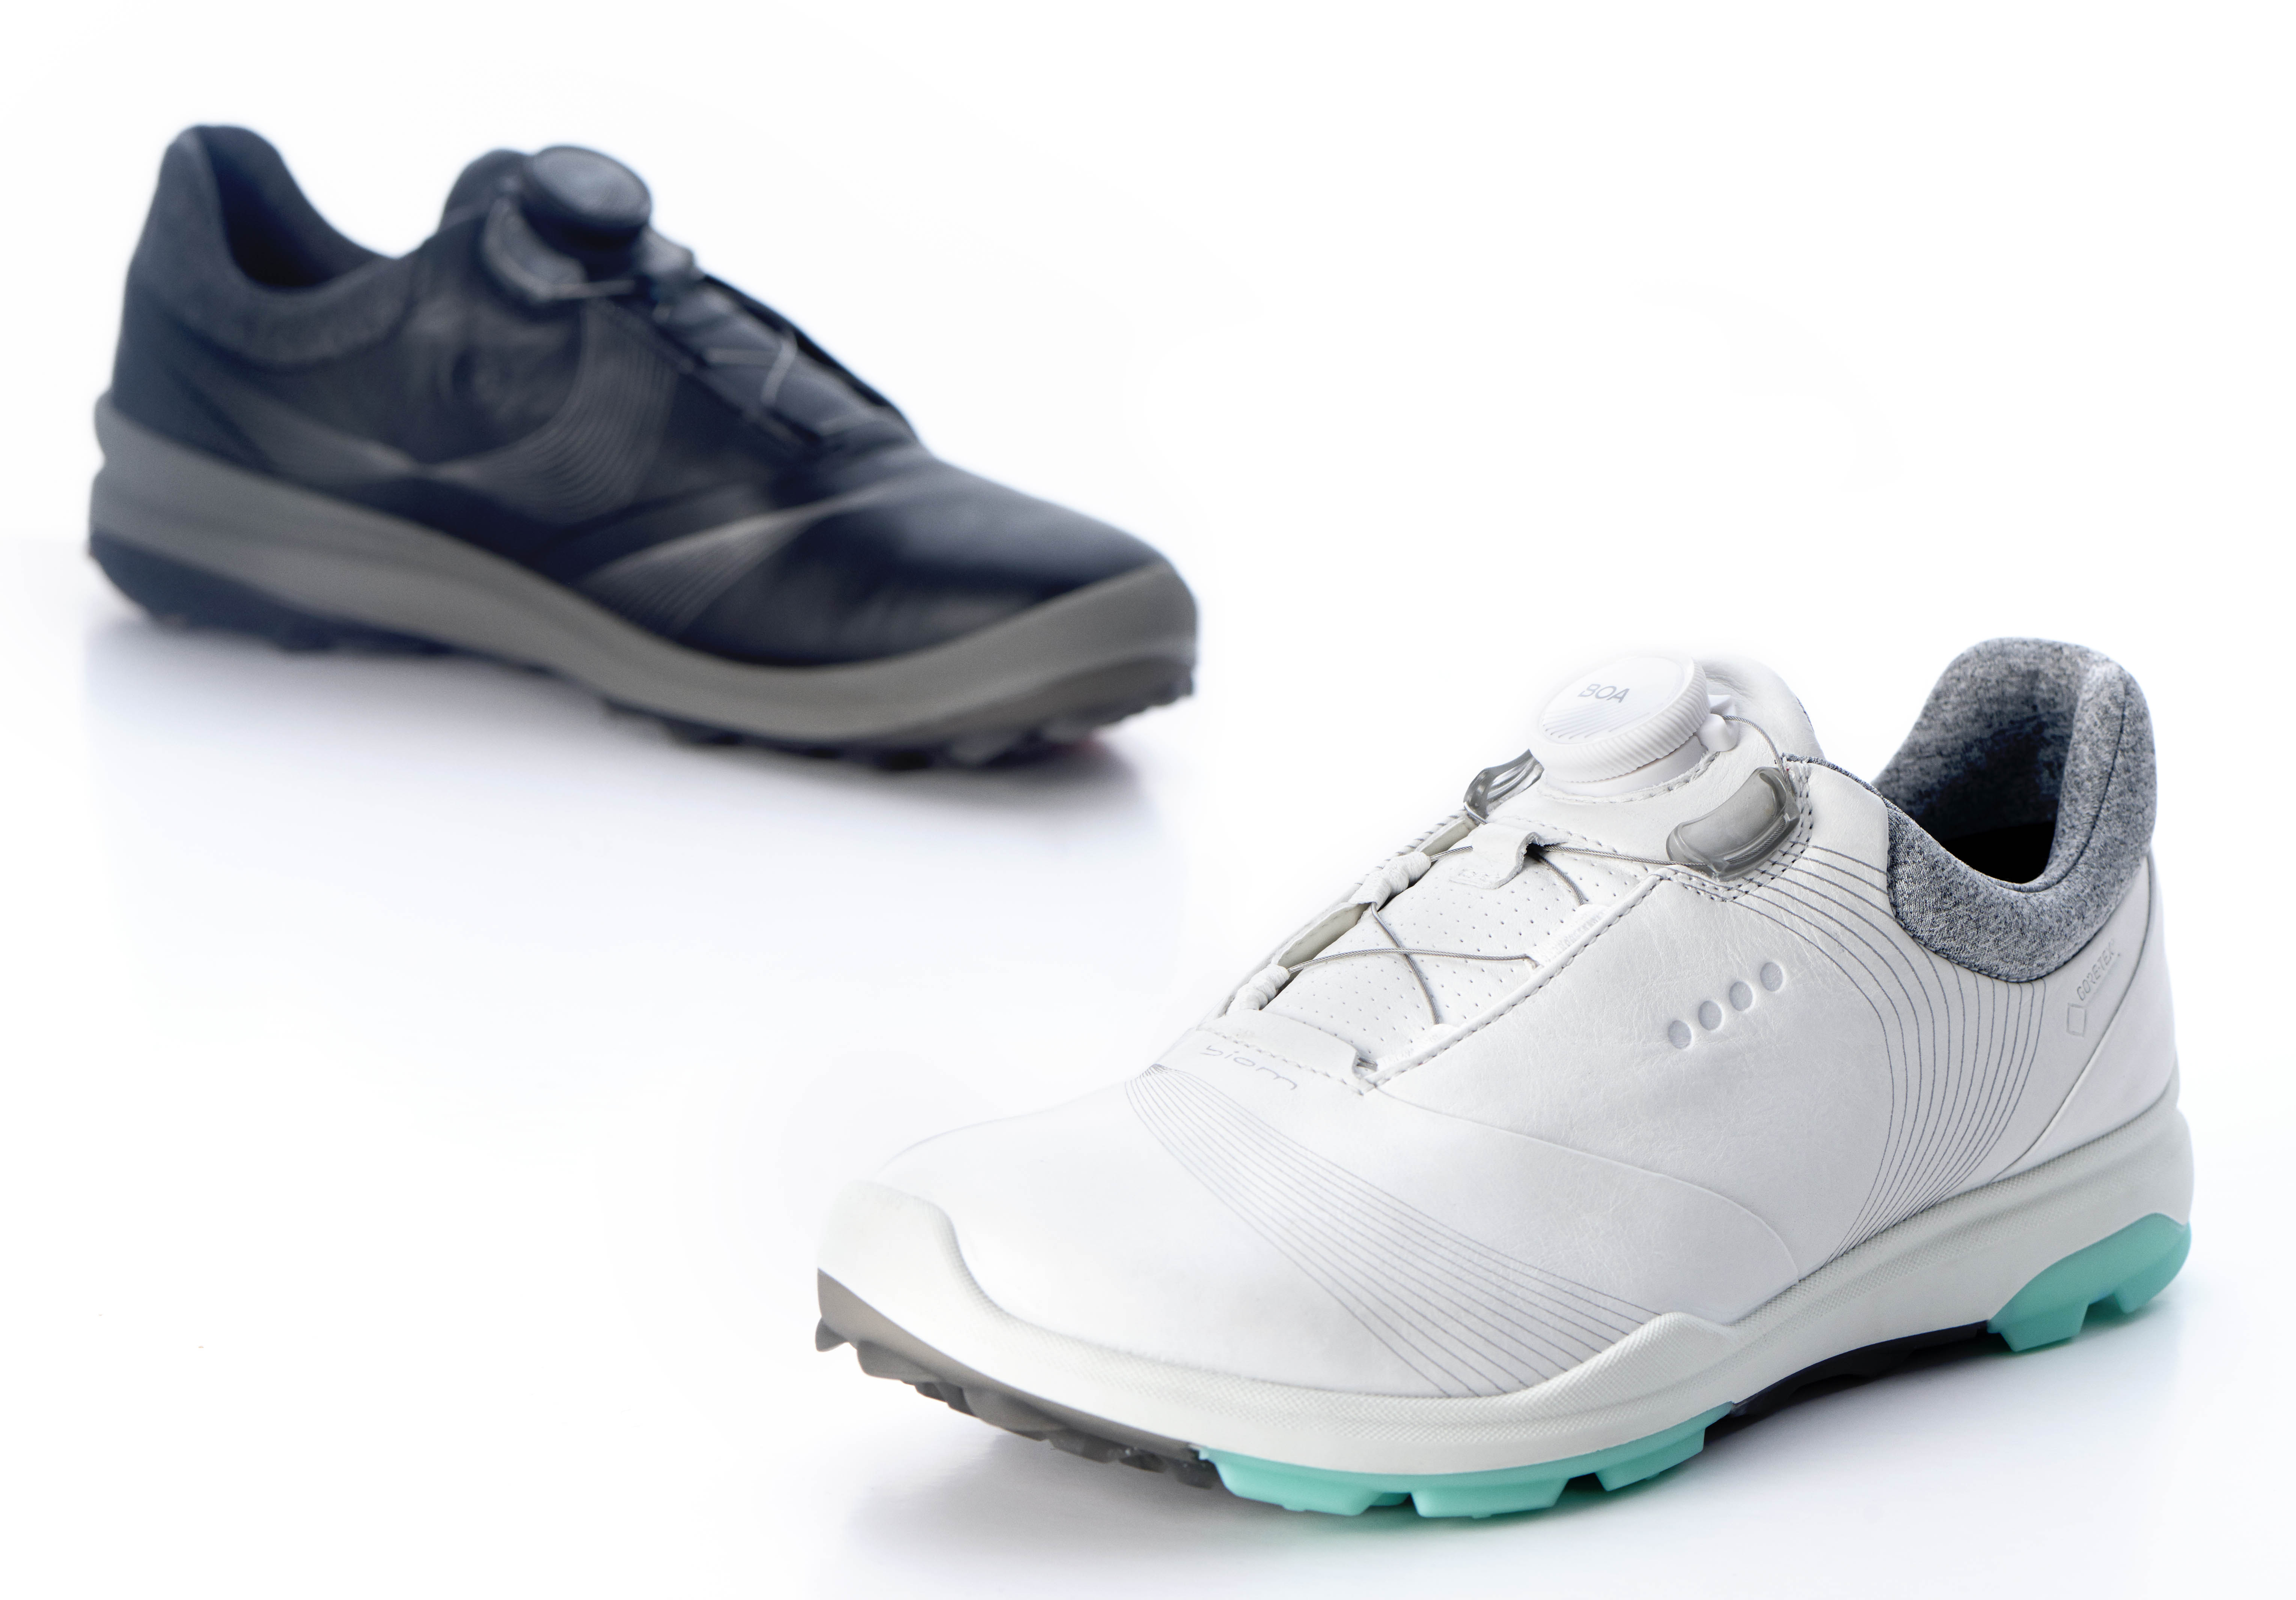 ECCO launches women's Biom Hybrid 3 golf shoe